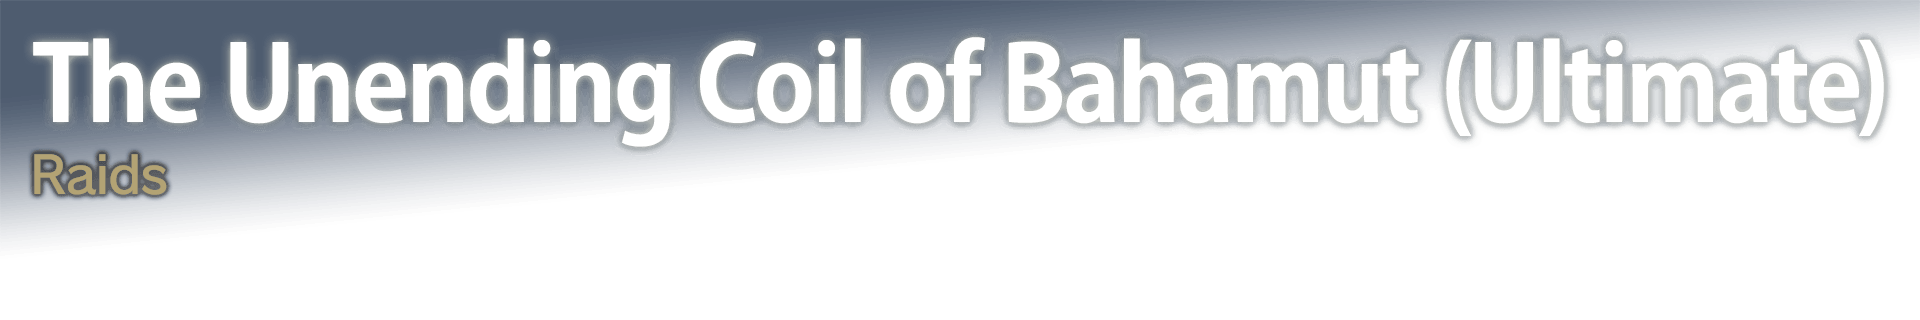  The Unending Coil of Bahamut (Ultimate) Raids